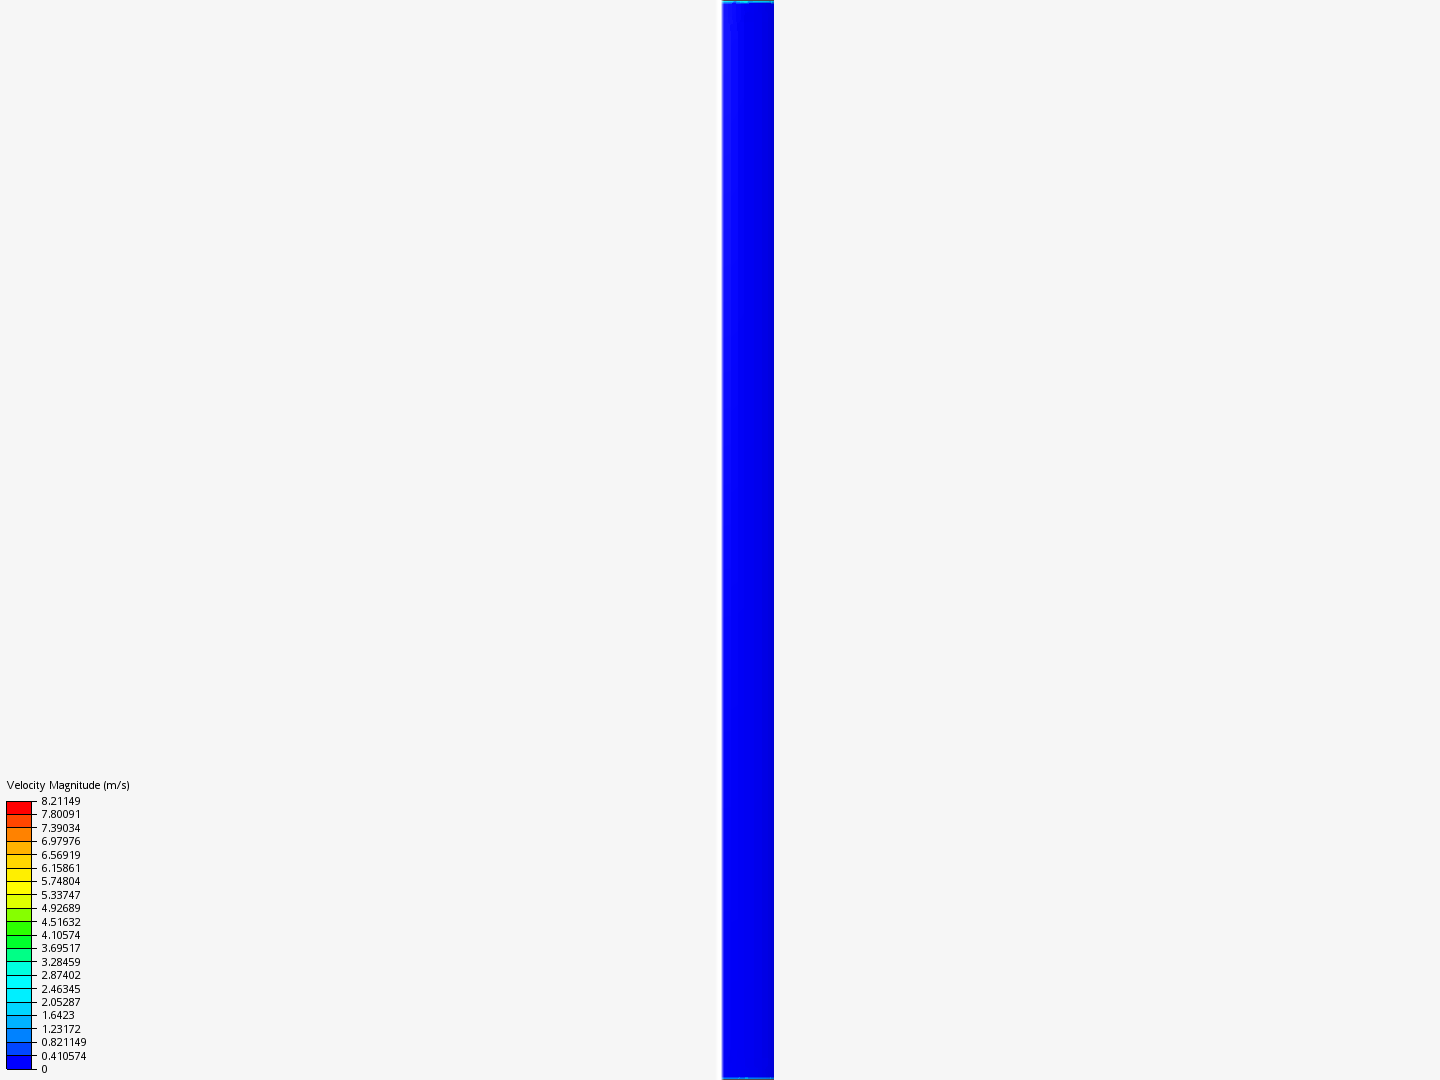 Pipe 1 m with 0.1 m Diameter image